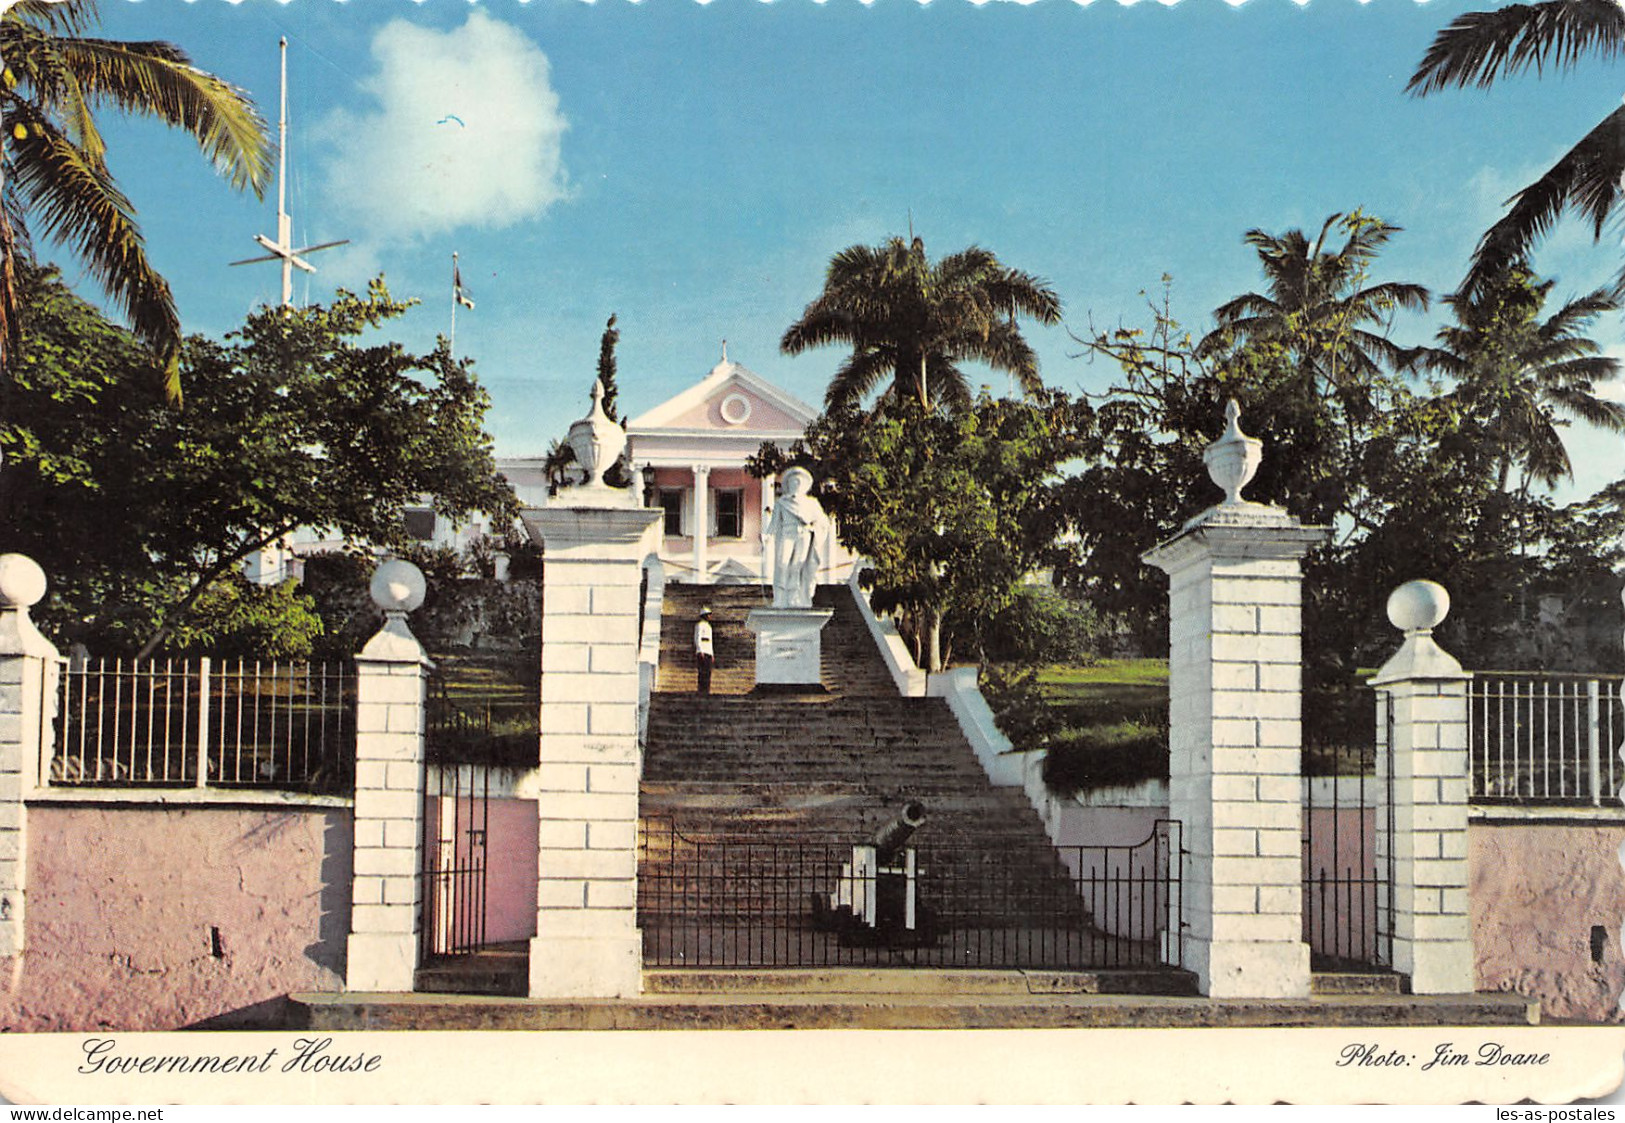 ANTILLES BAHAMAS GOVERNNENT HOUSE - Bahamas